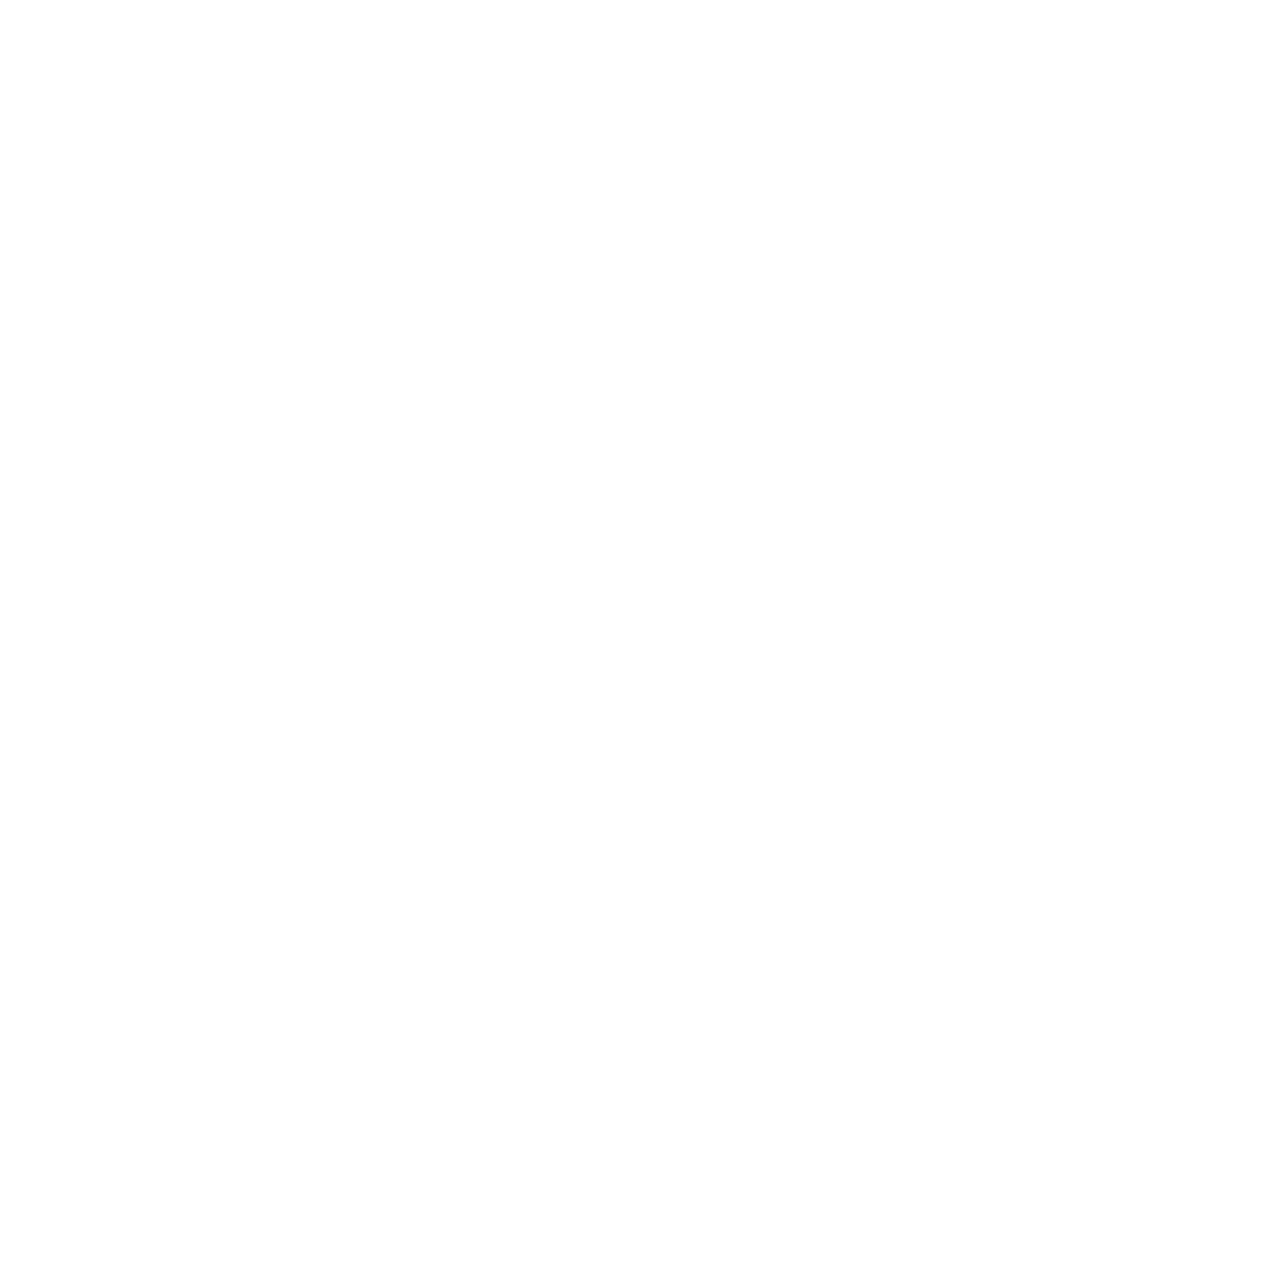 Elle featuring Ricki's